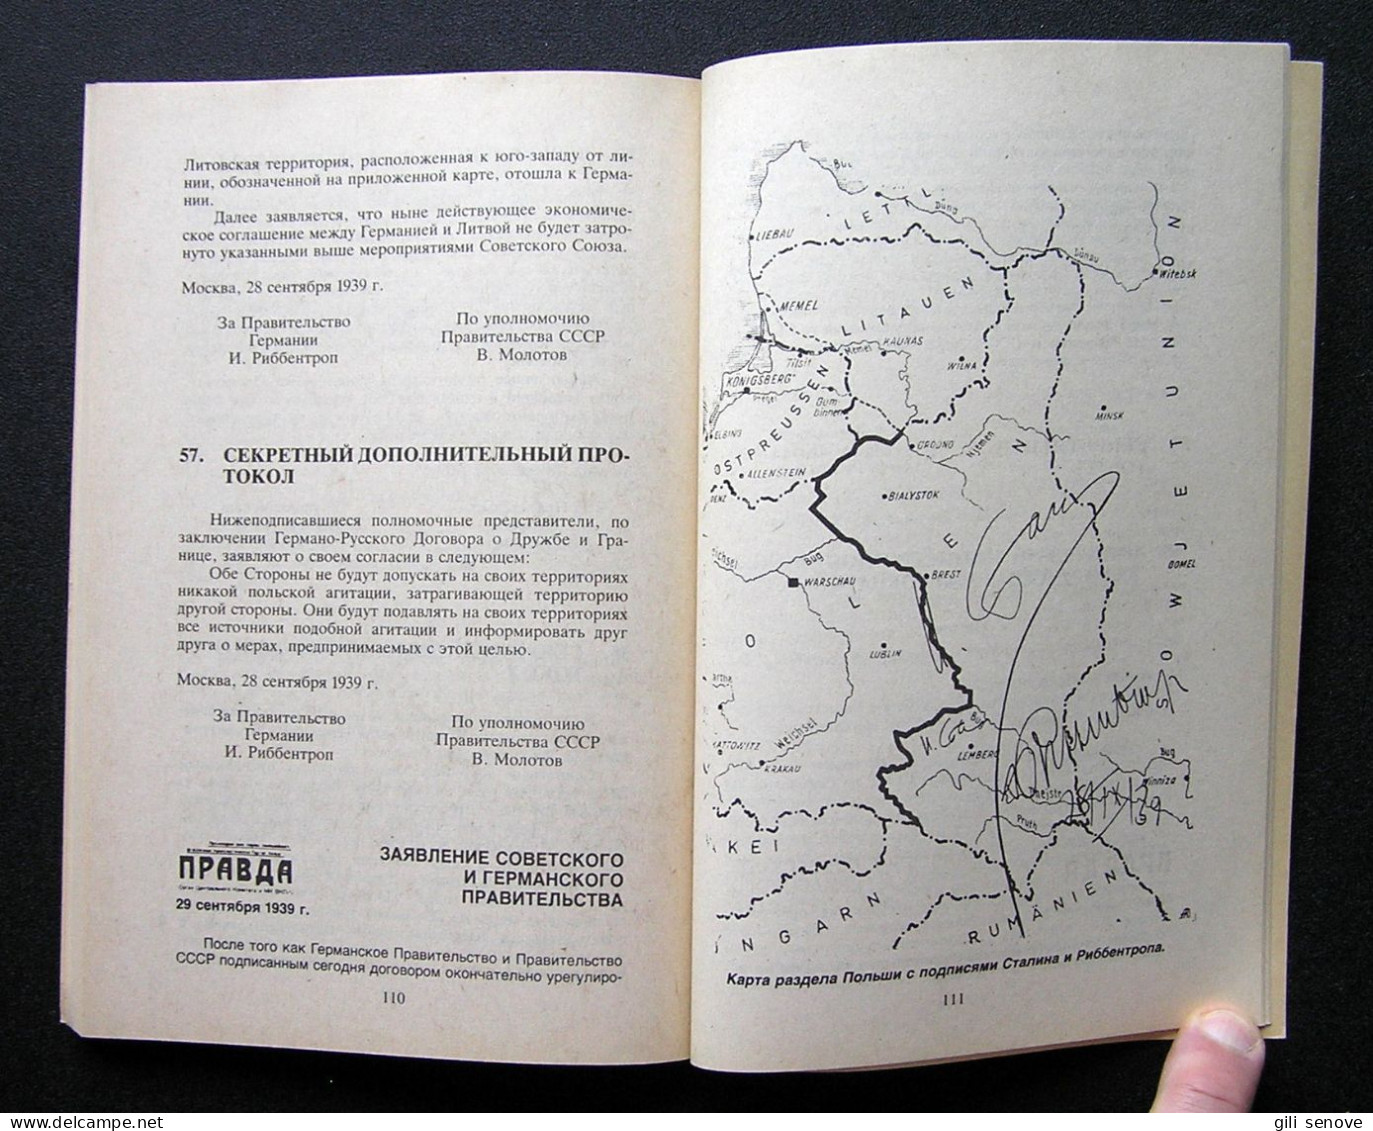 Lithuanian Book / TSRS-Vokietija 1939 1989 - Cultural